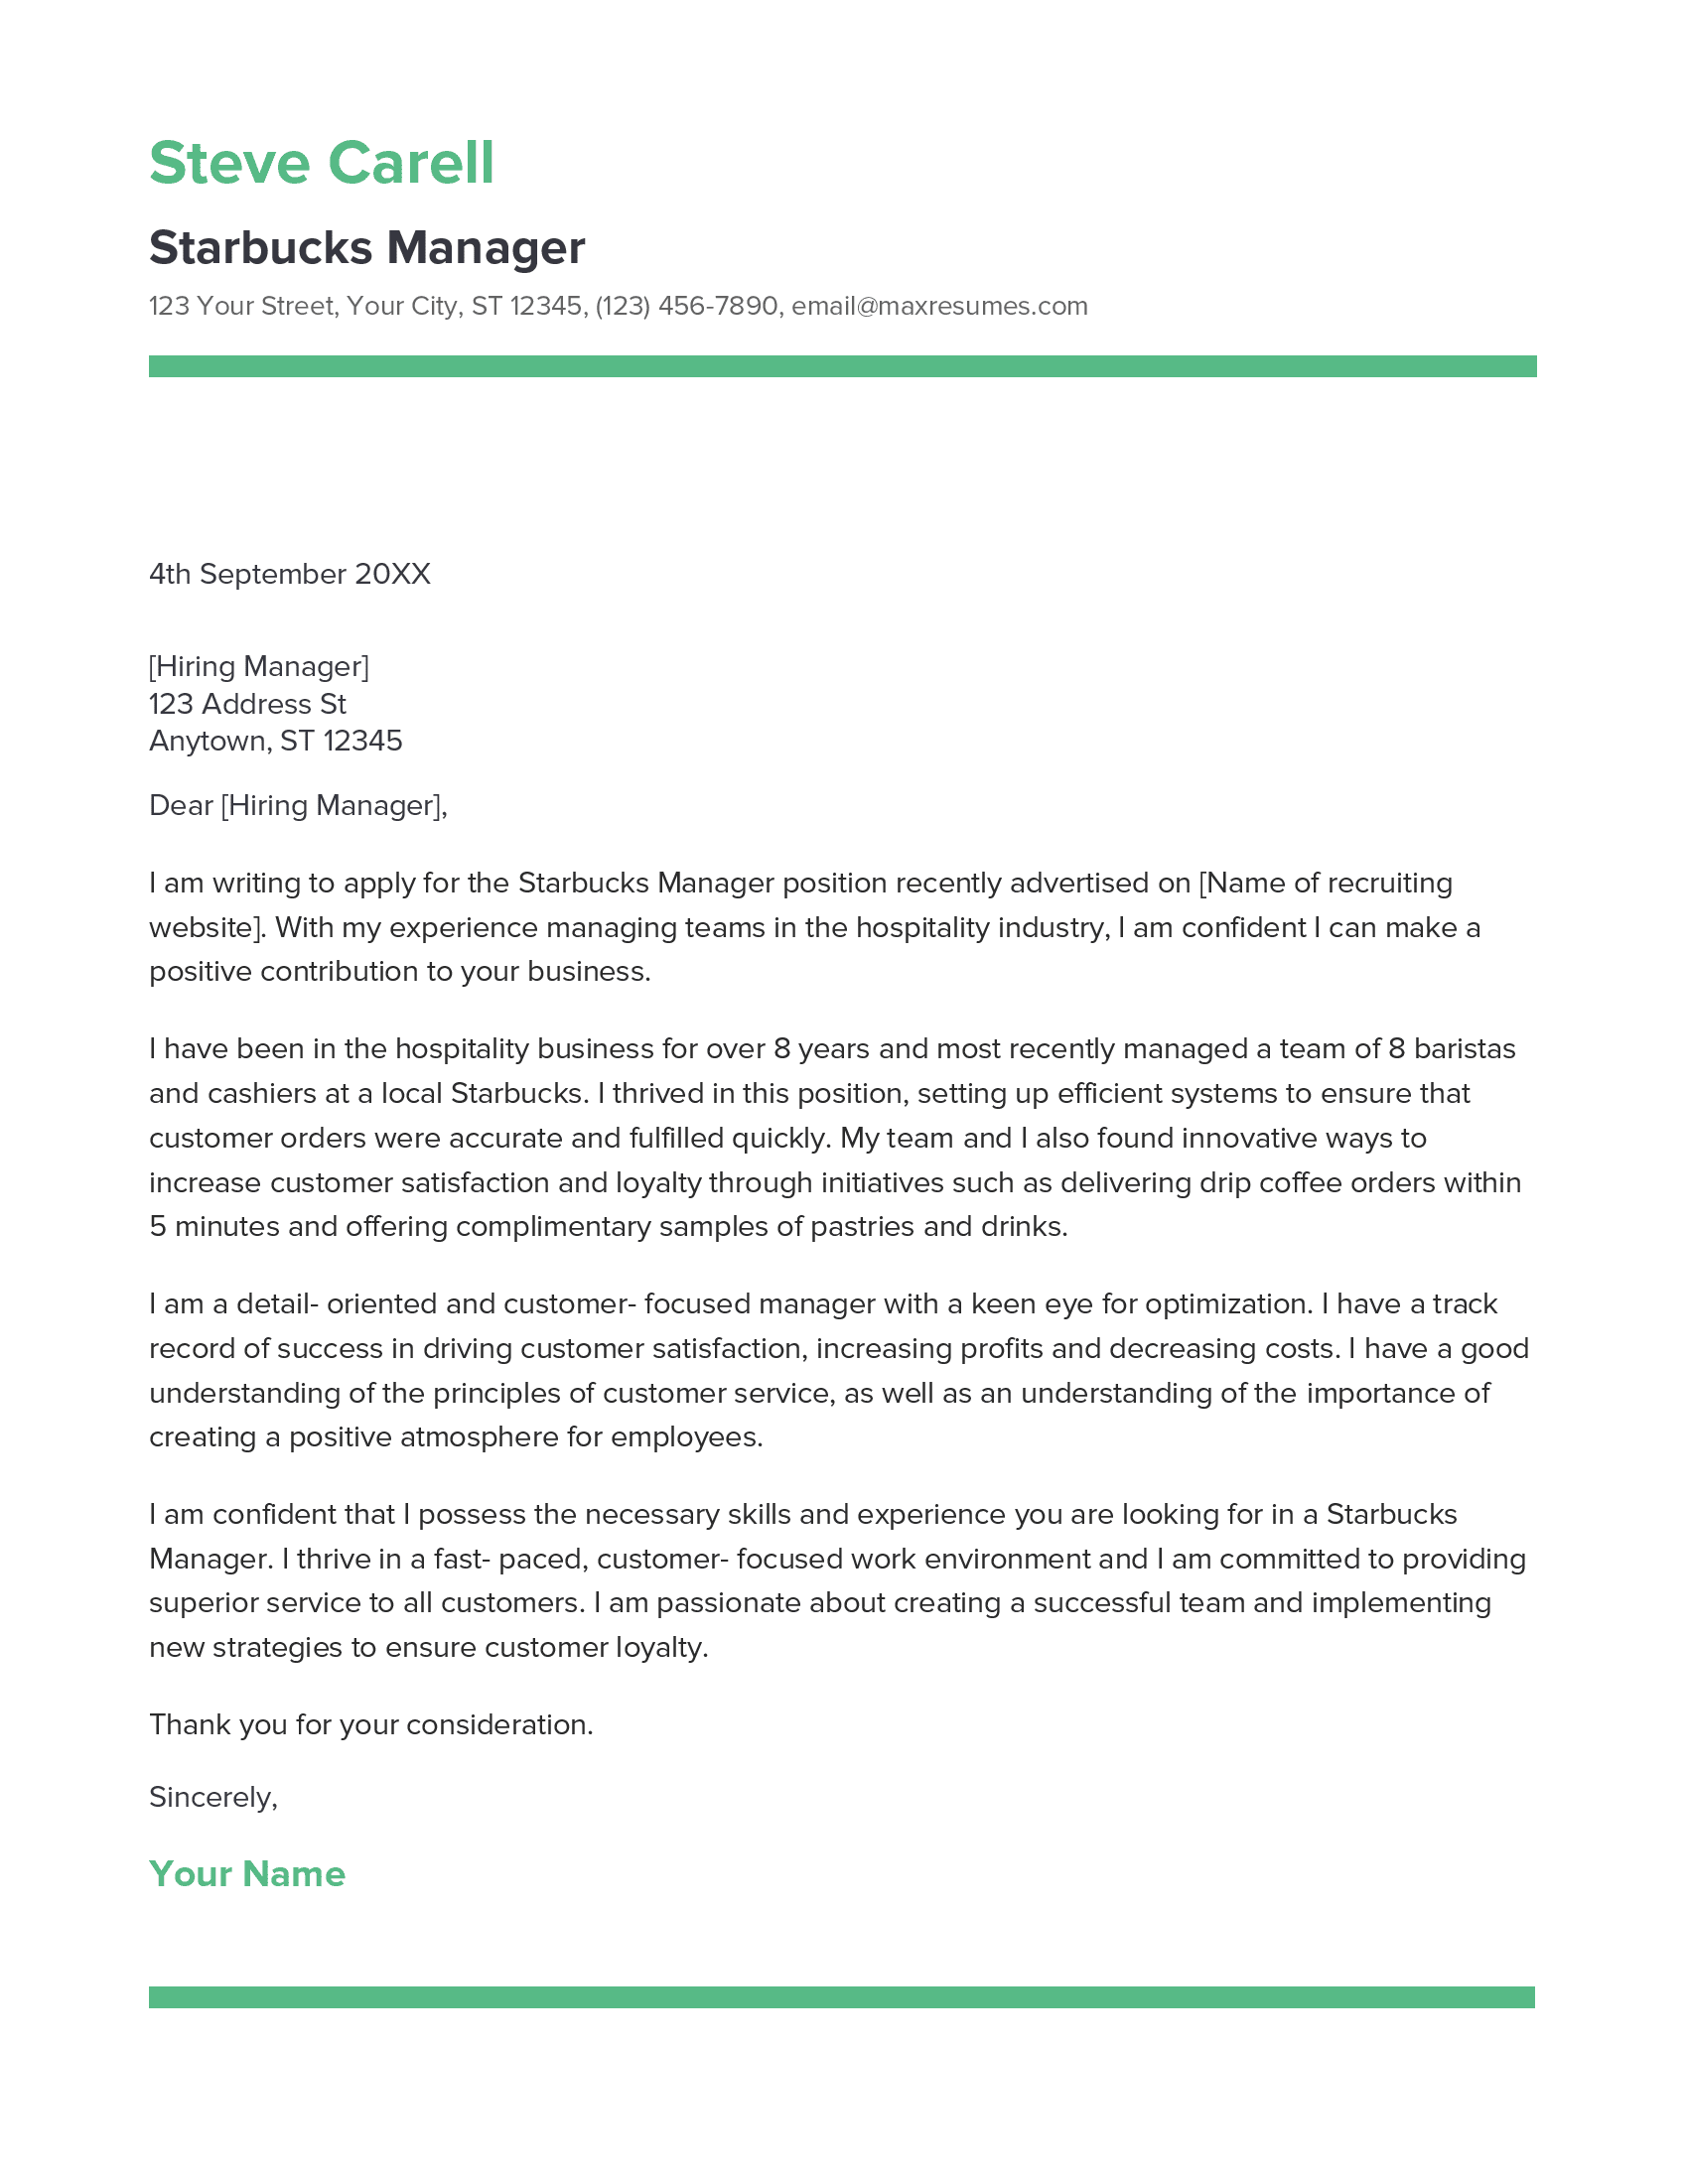 Starbucks Manager Cover Letter Example